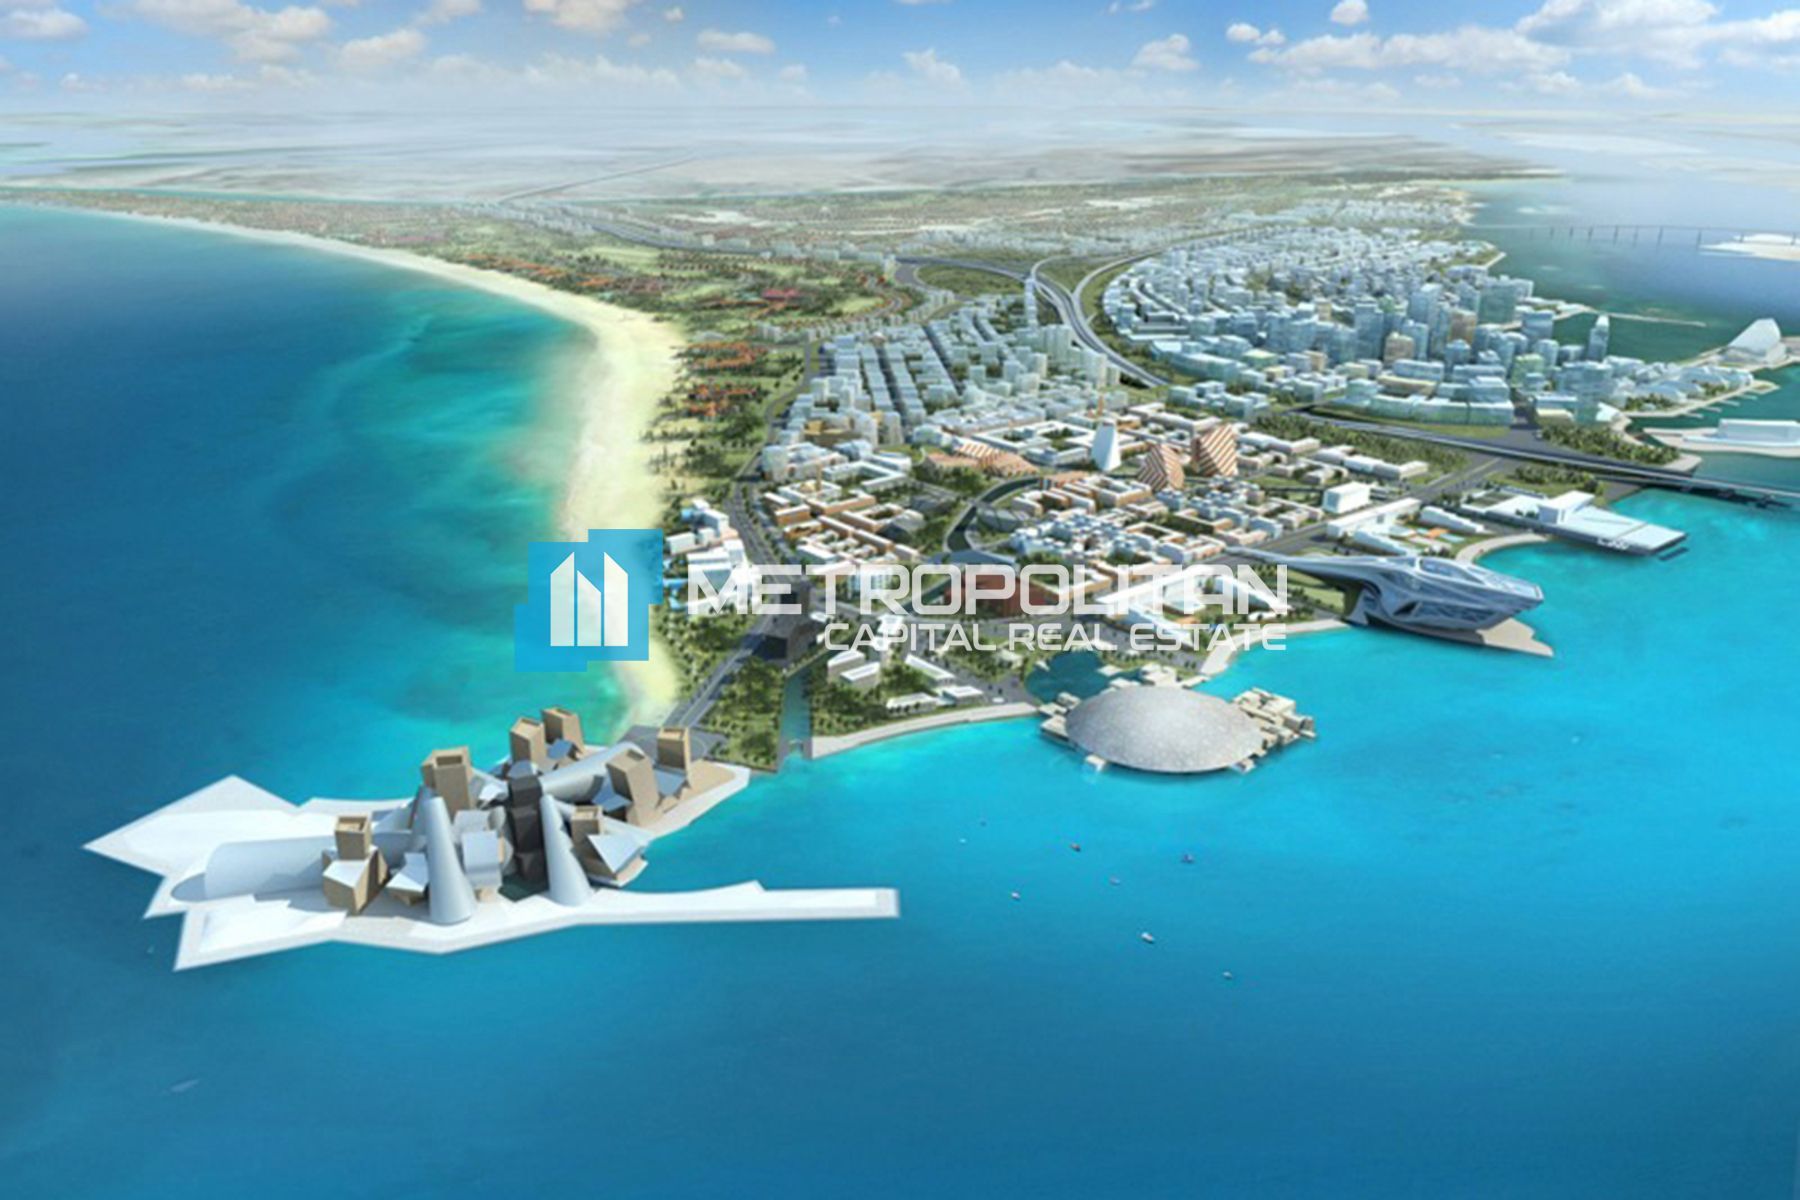 Image - Saadiyat Reserve, Saadiyat Island, Abu Dhabi | Project - Land Residential